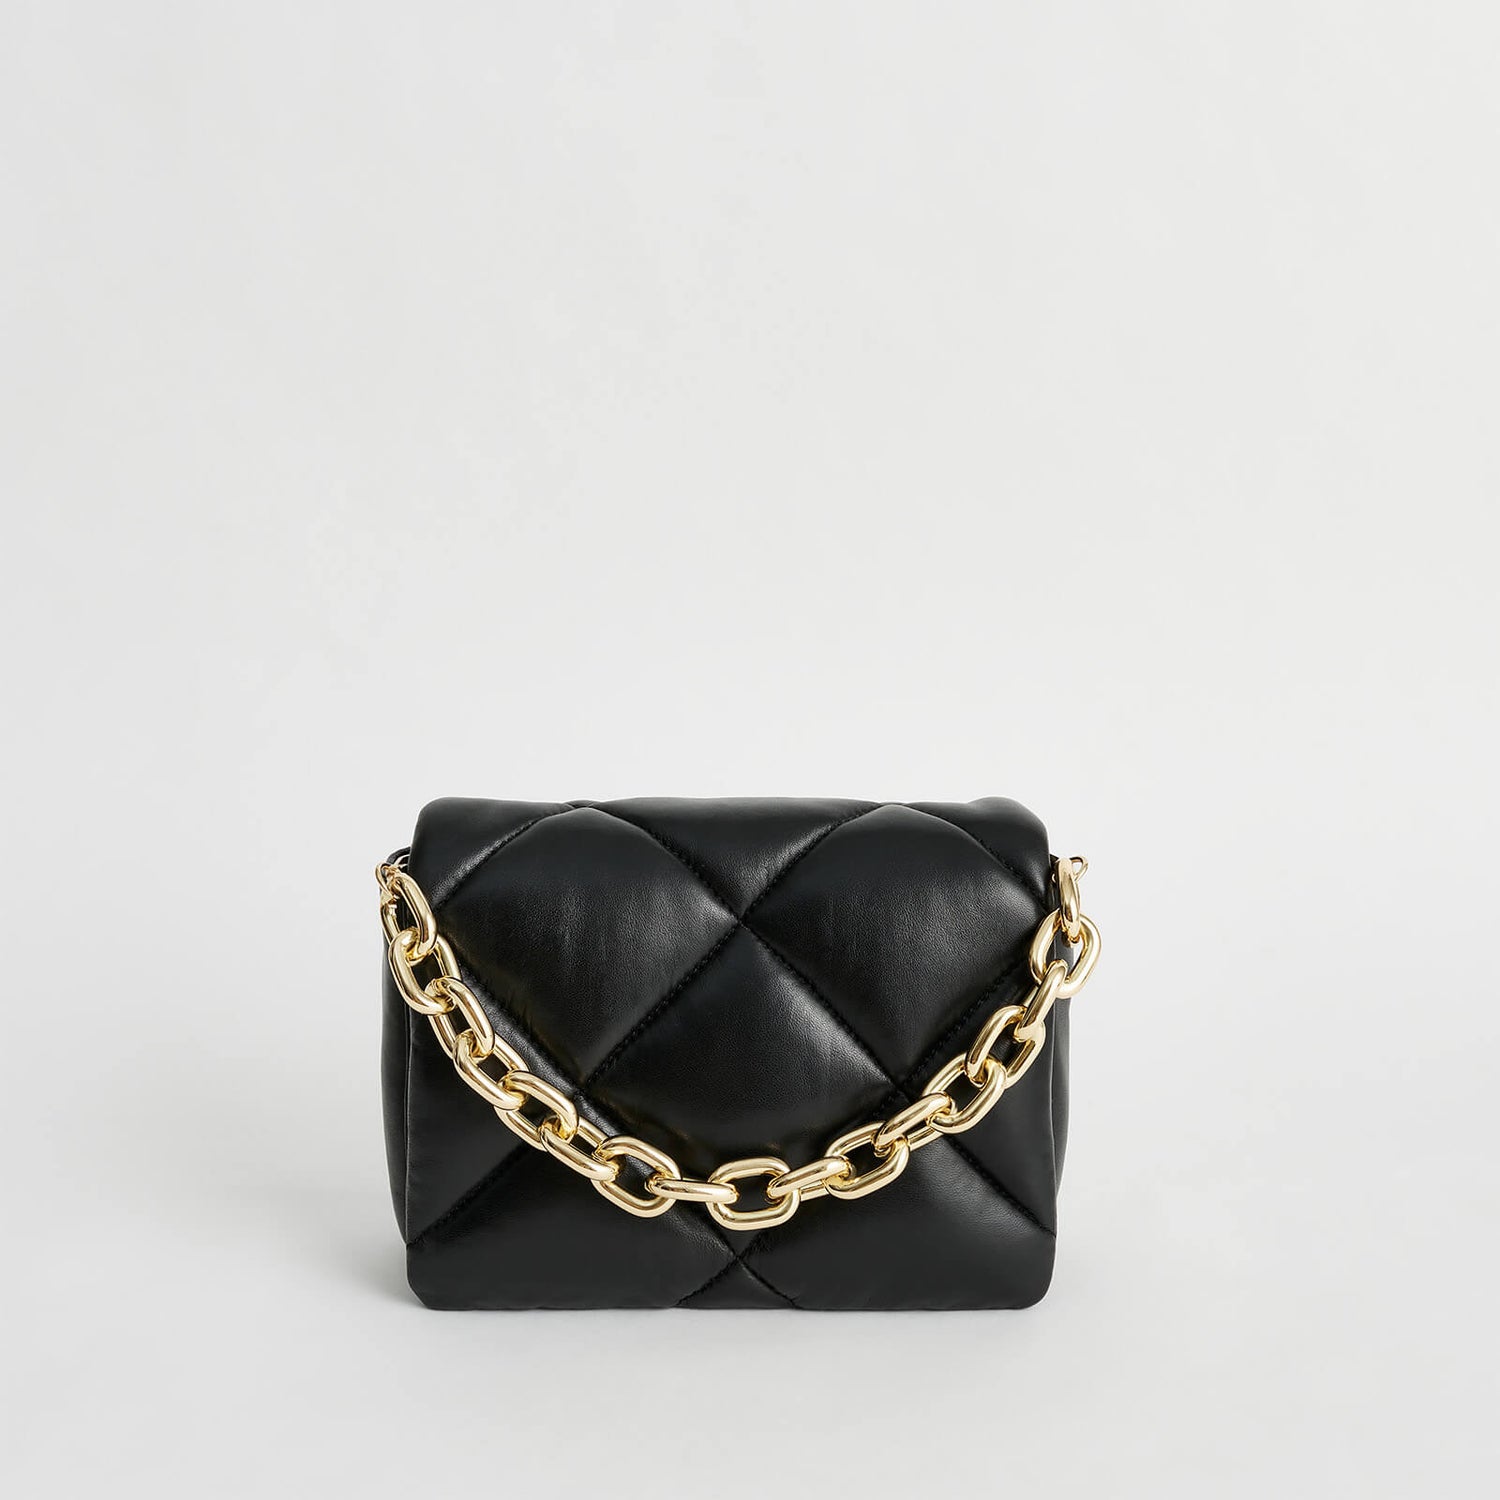 Stand Studio Women's Brynn Chain Leather Bag - Black